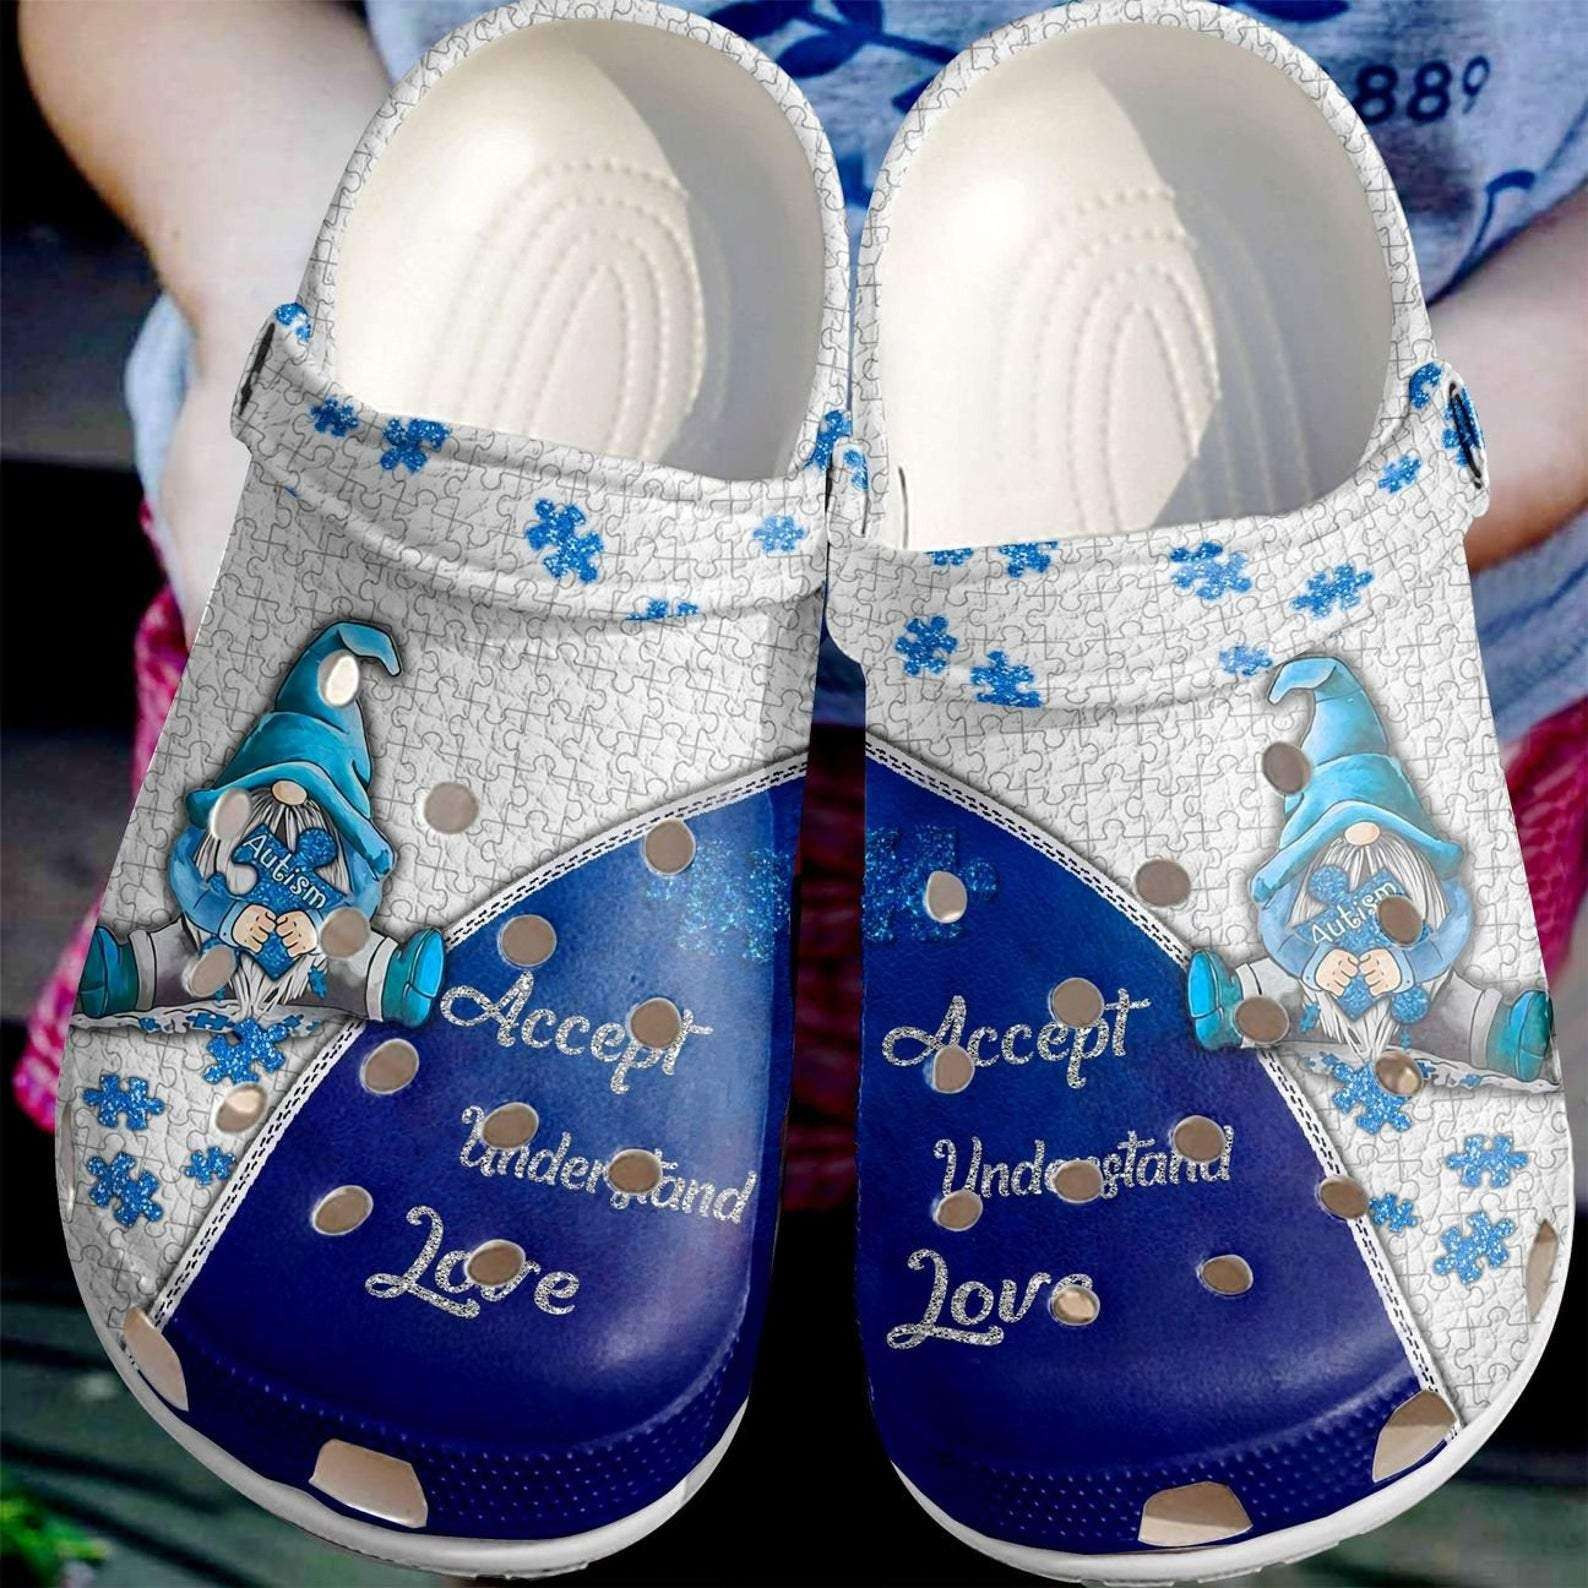 Autism Awareness Day Gnome Accept Understand Love Puzzle Pieces Crocs Crocband Clog Shoes